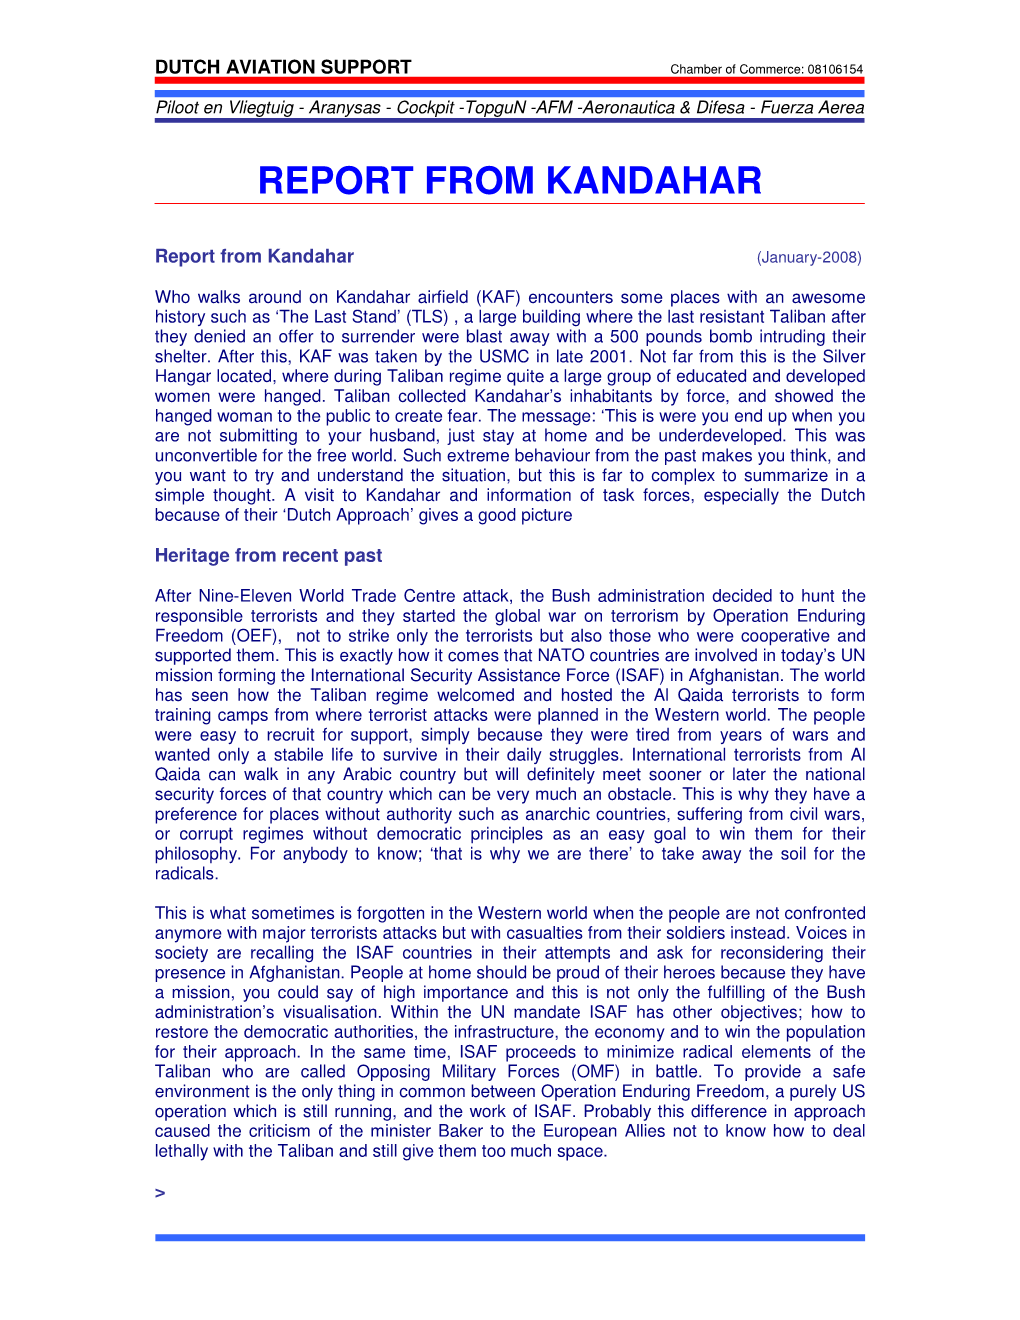 Report from Kandahar